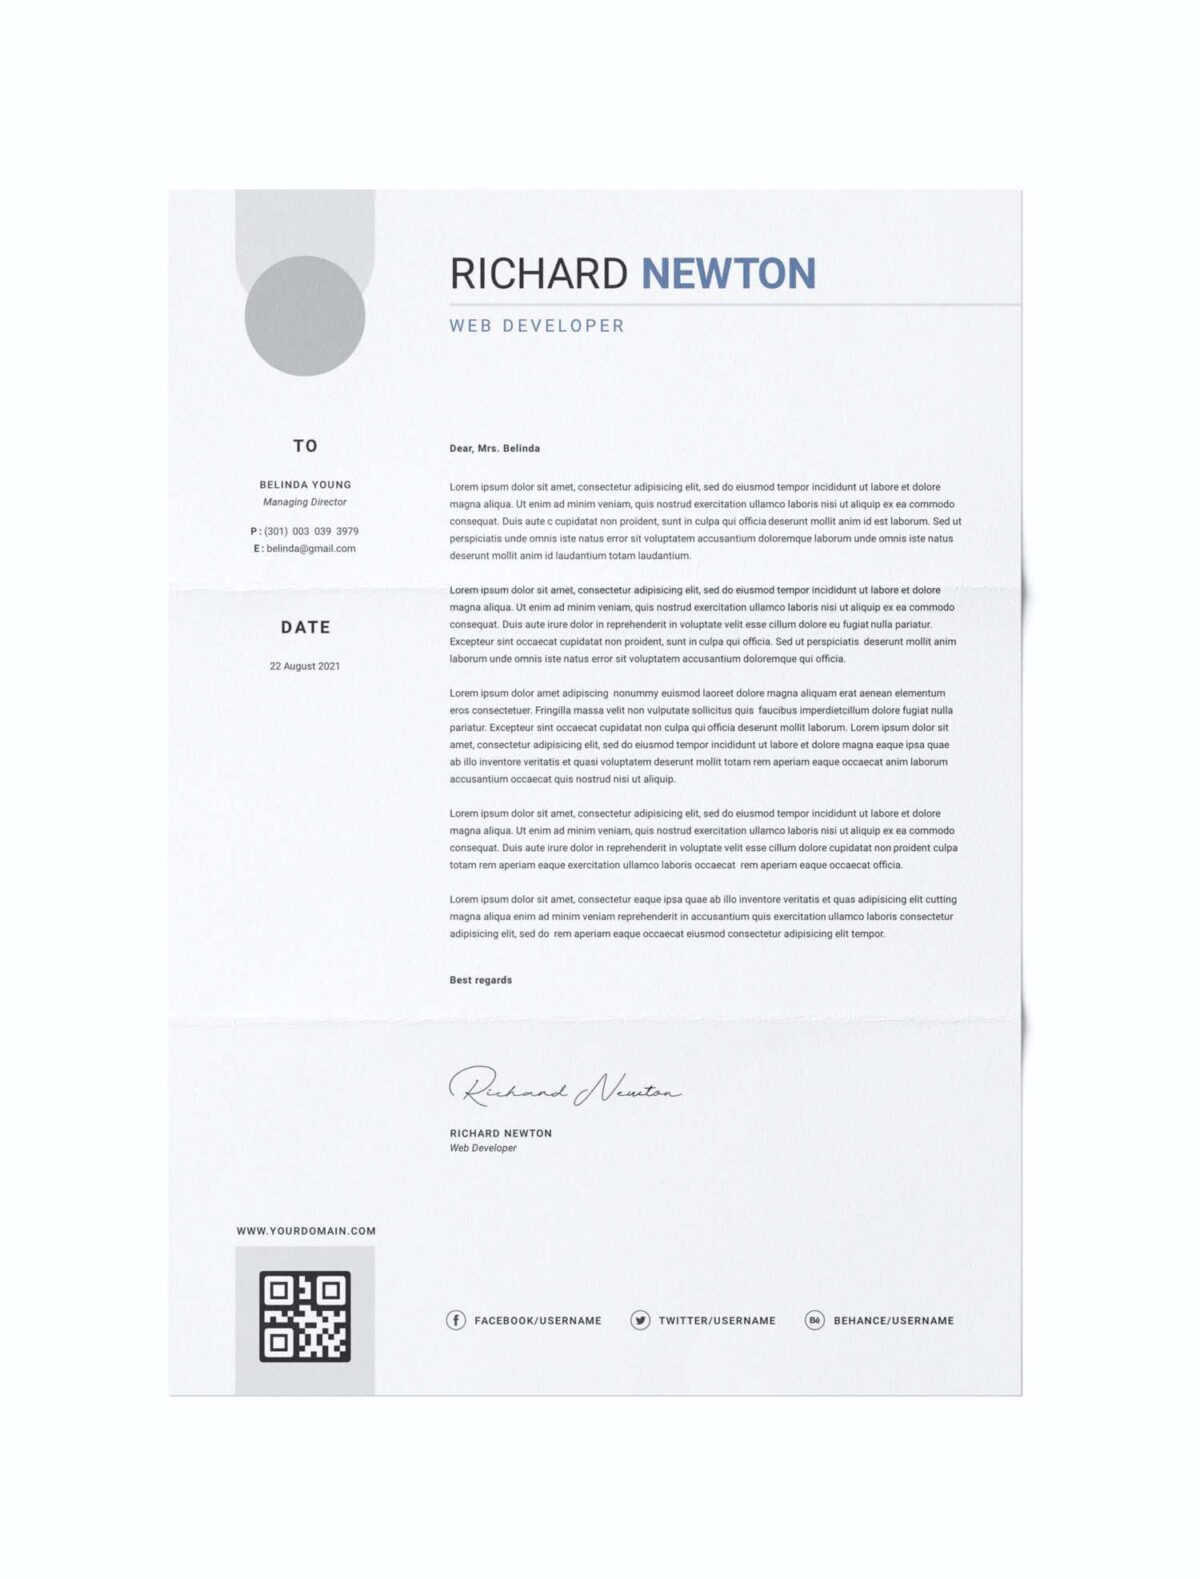 CV #18 Richard Newton